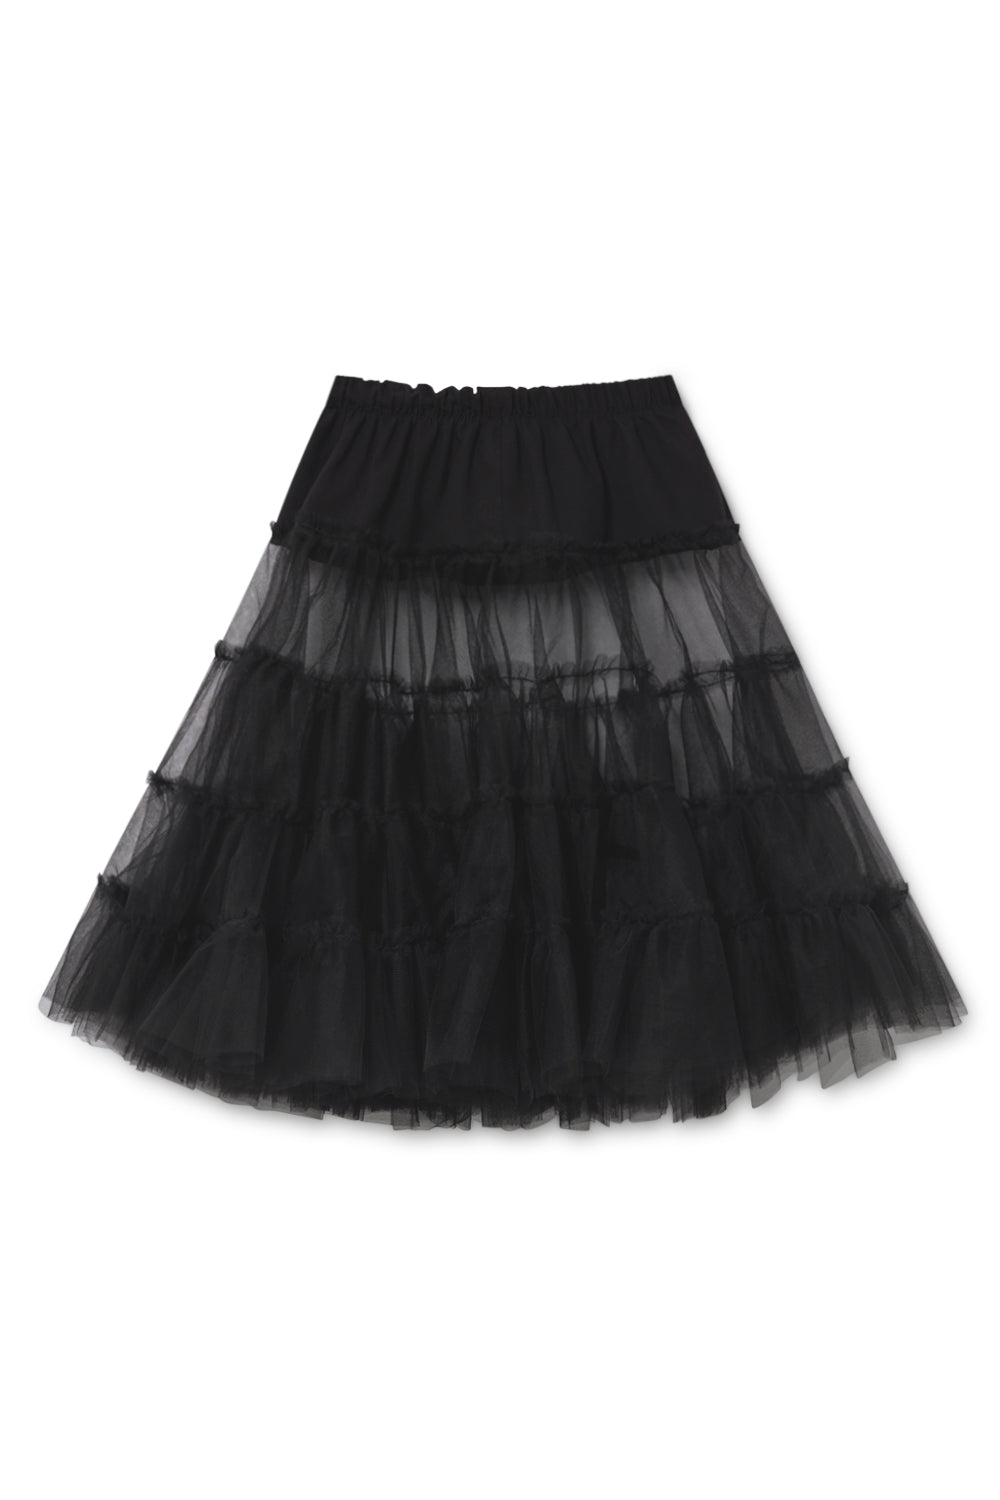 Little Creative Factory Sestina Mini Skirt - Black